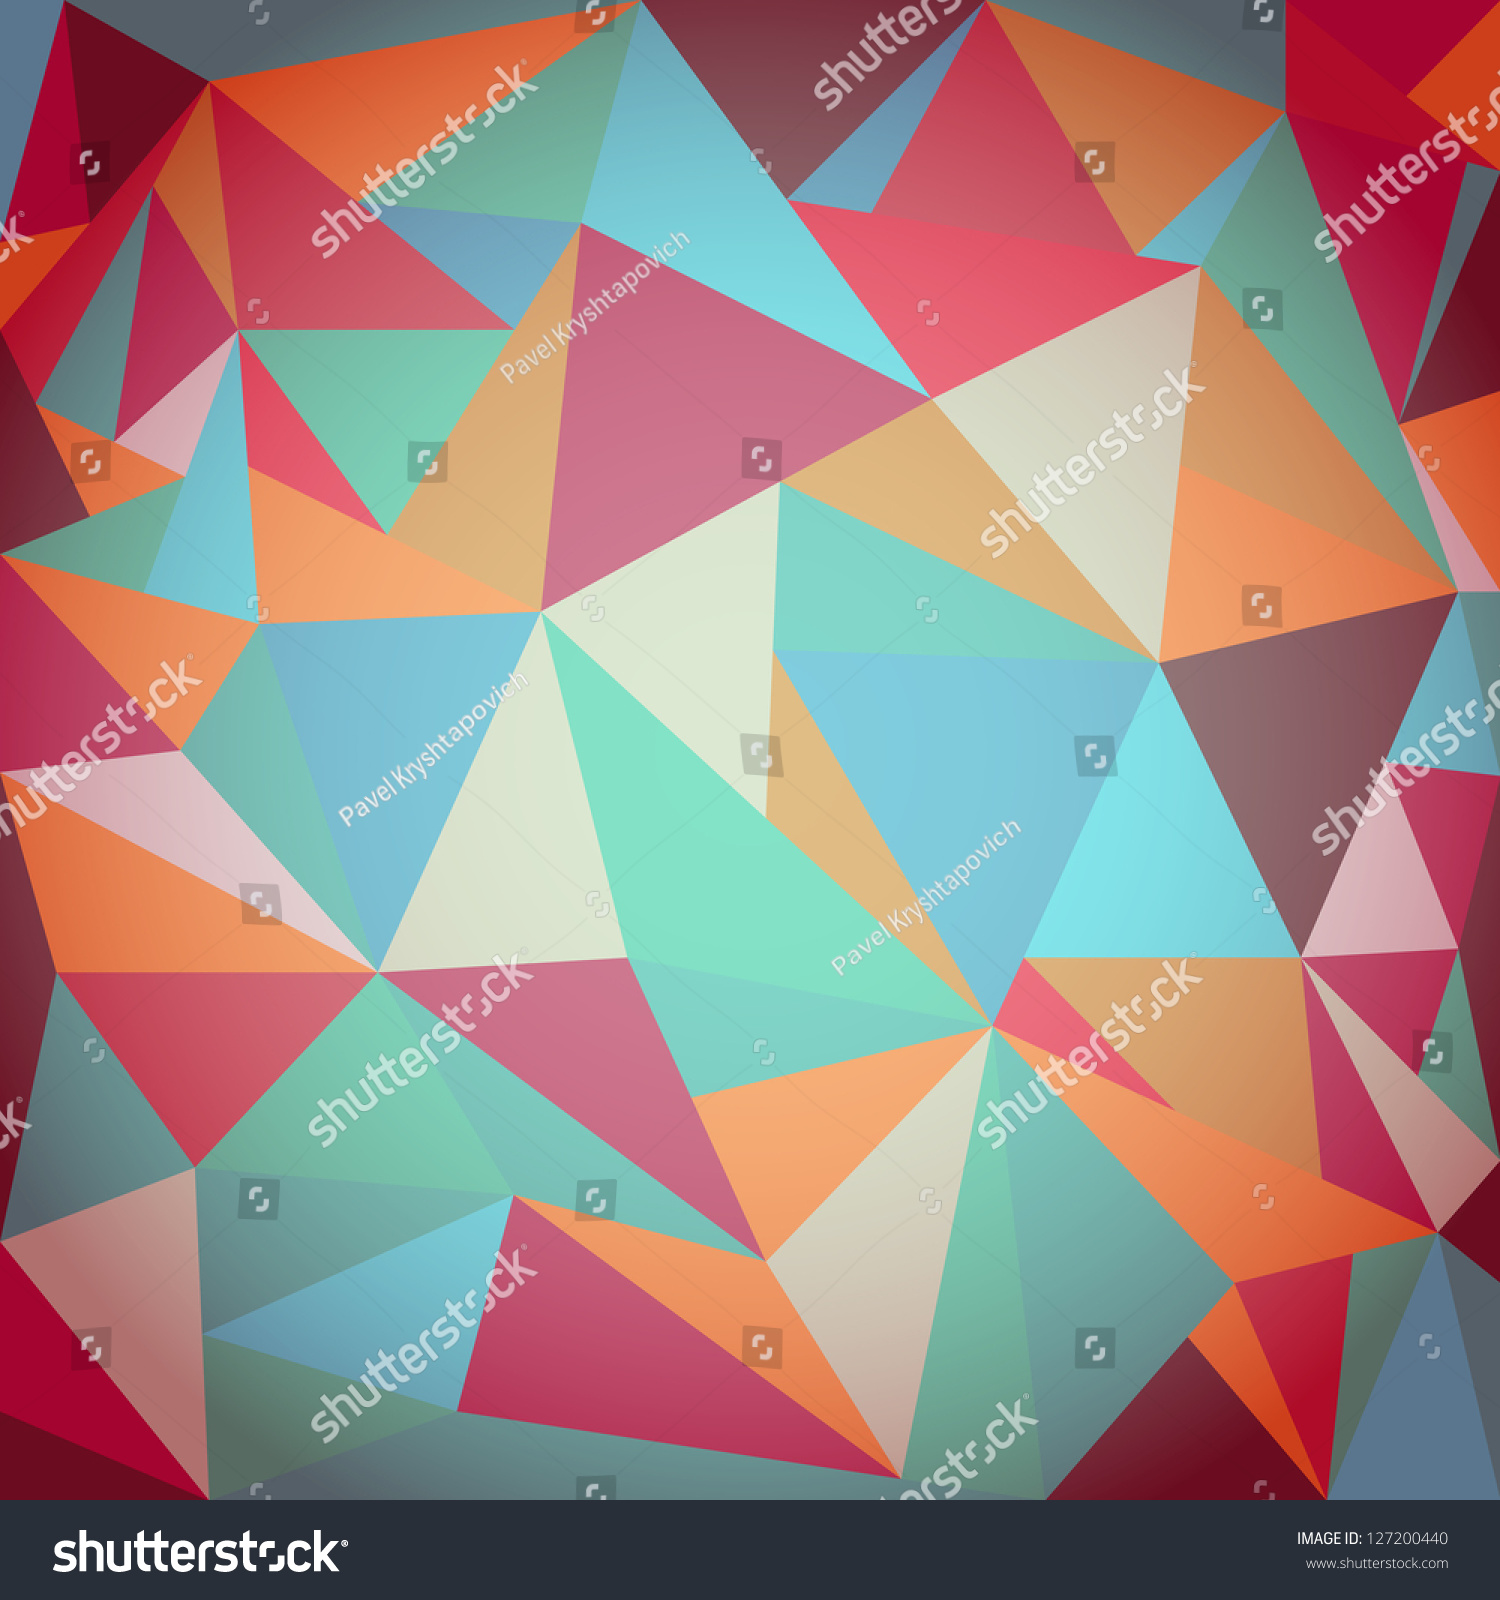 Bright Geometric Vector Background - 127200440 : Shutterstock